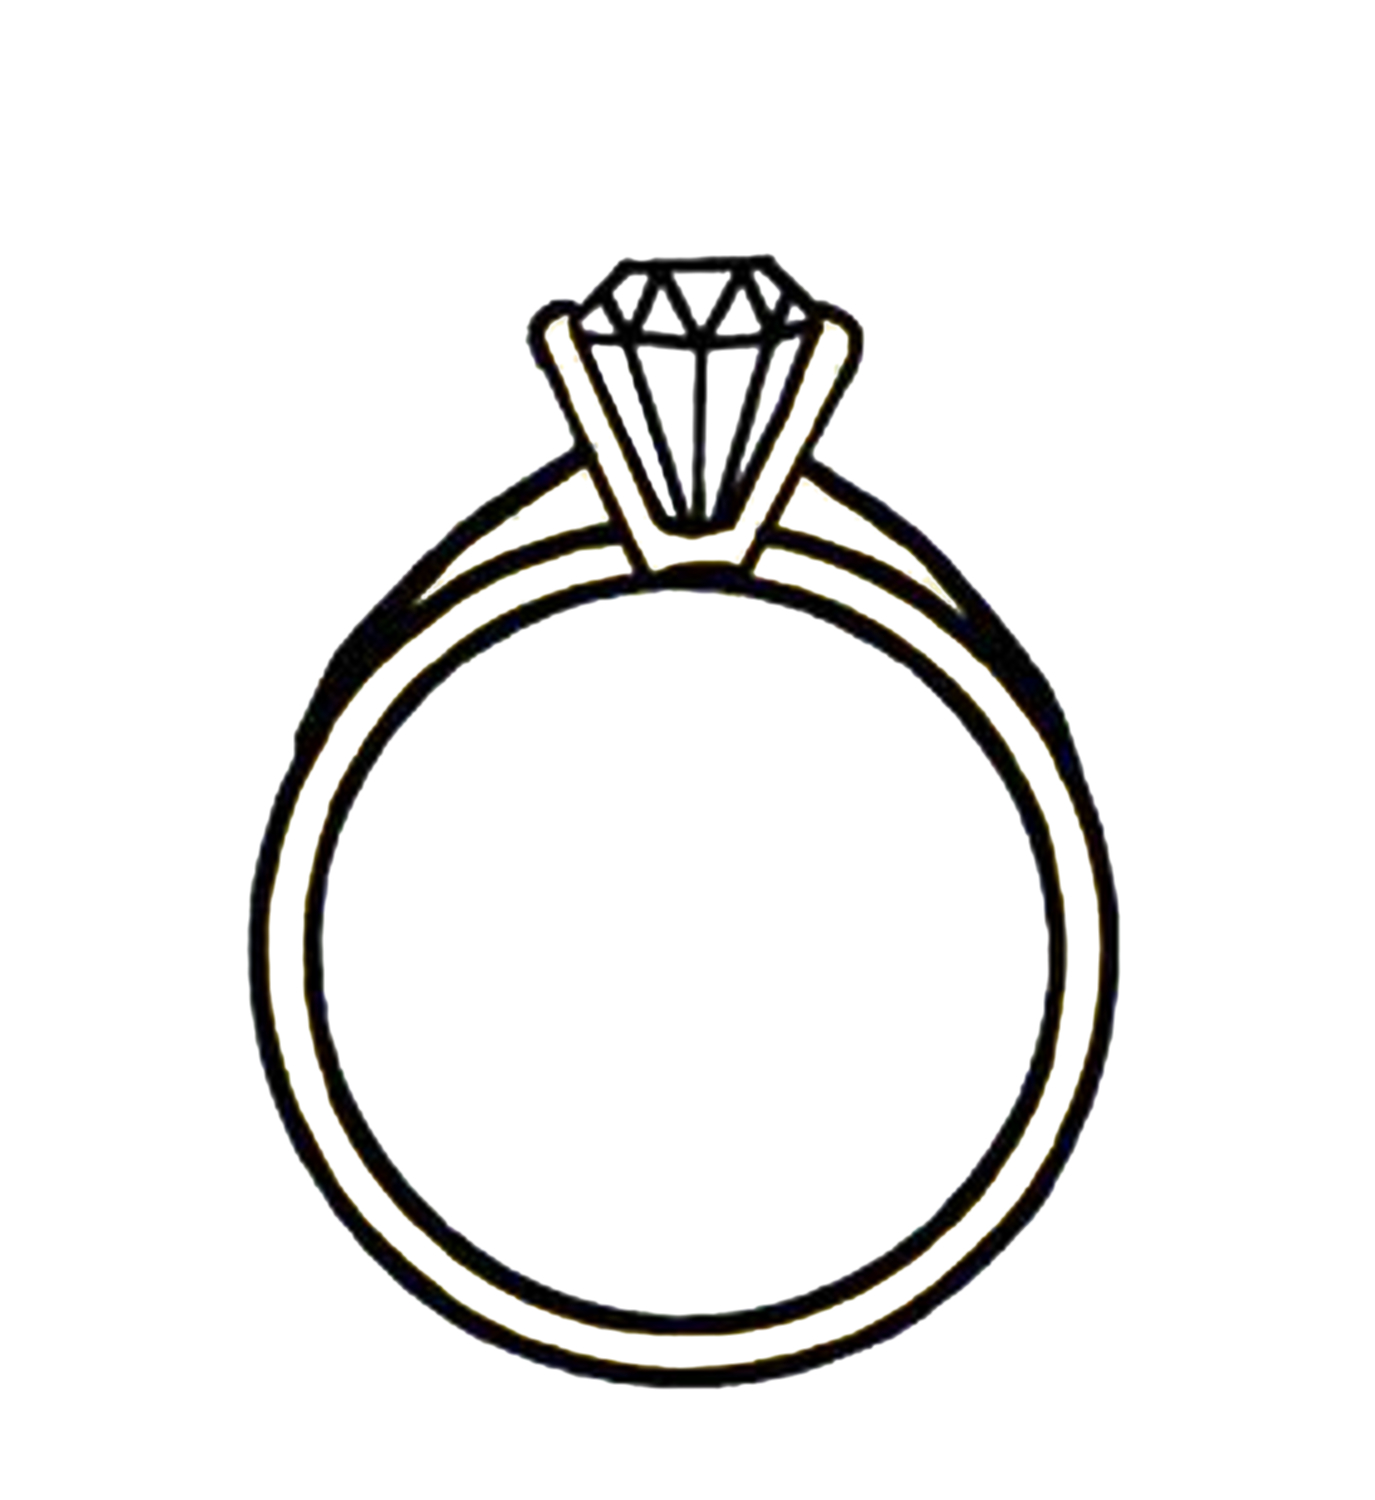 Rings clipart #3, Download drawings